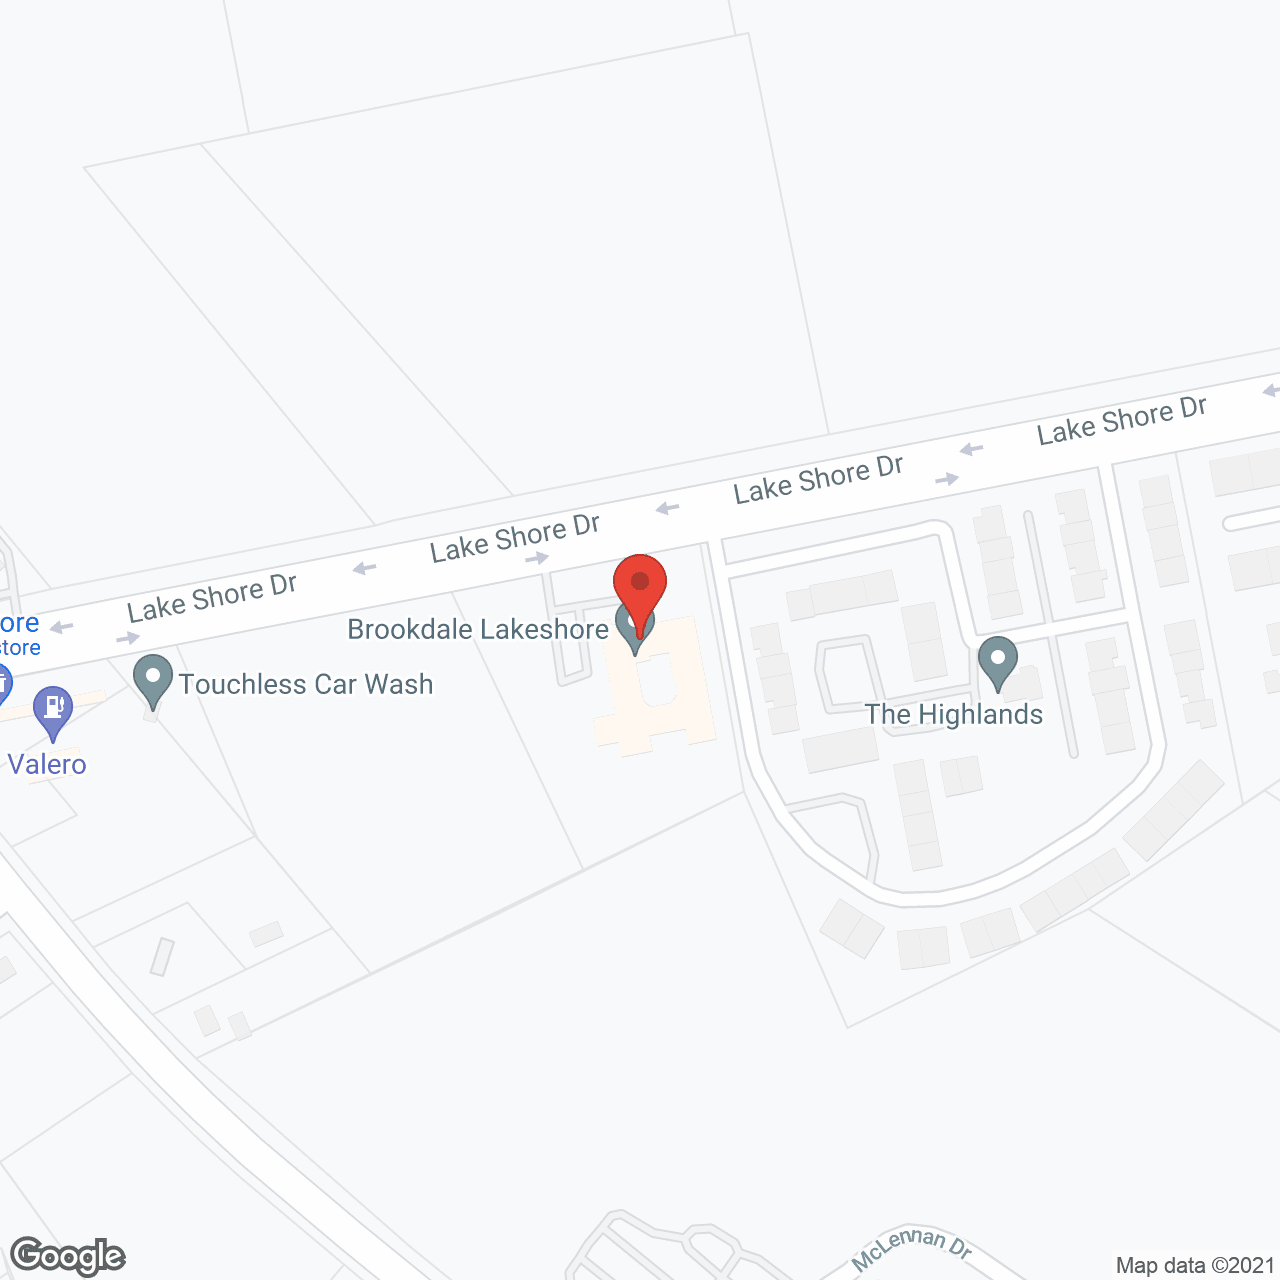 Brookdale Lakeshore in google map